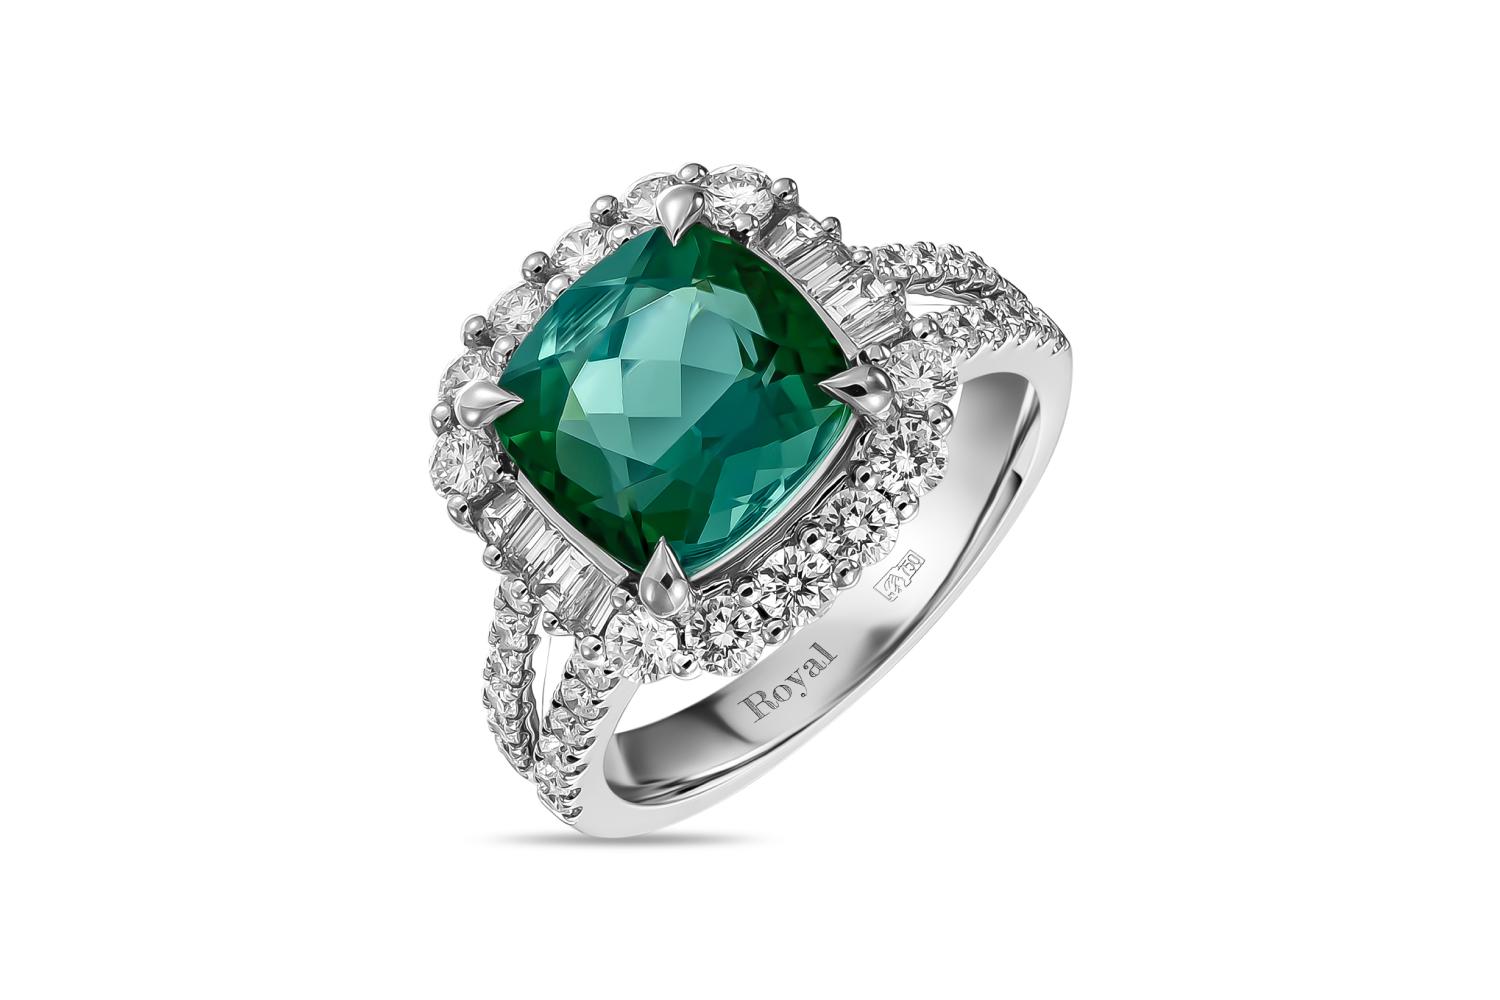 Cushion-cut diamond and tourmaline ring, 3.95 carats